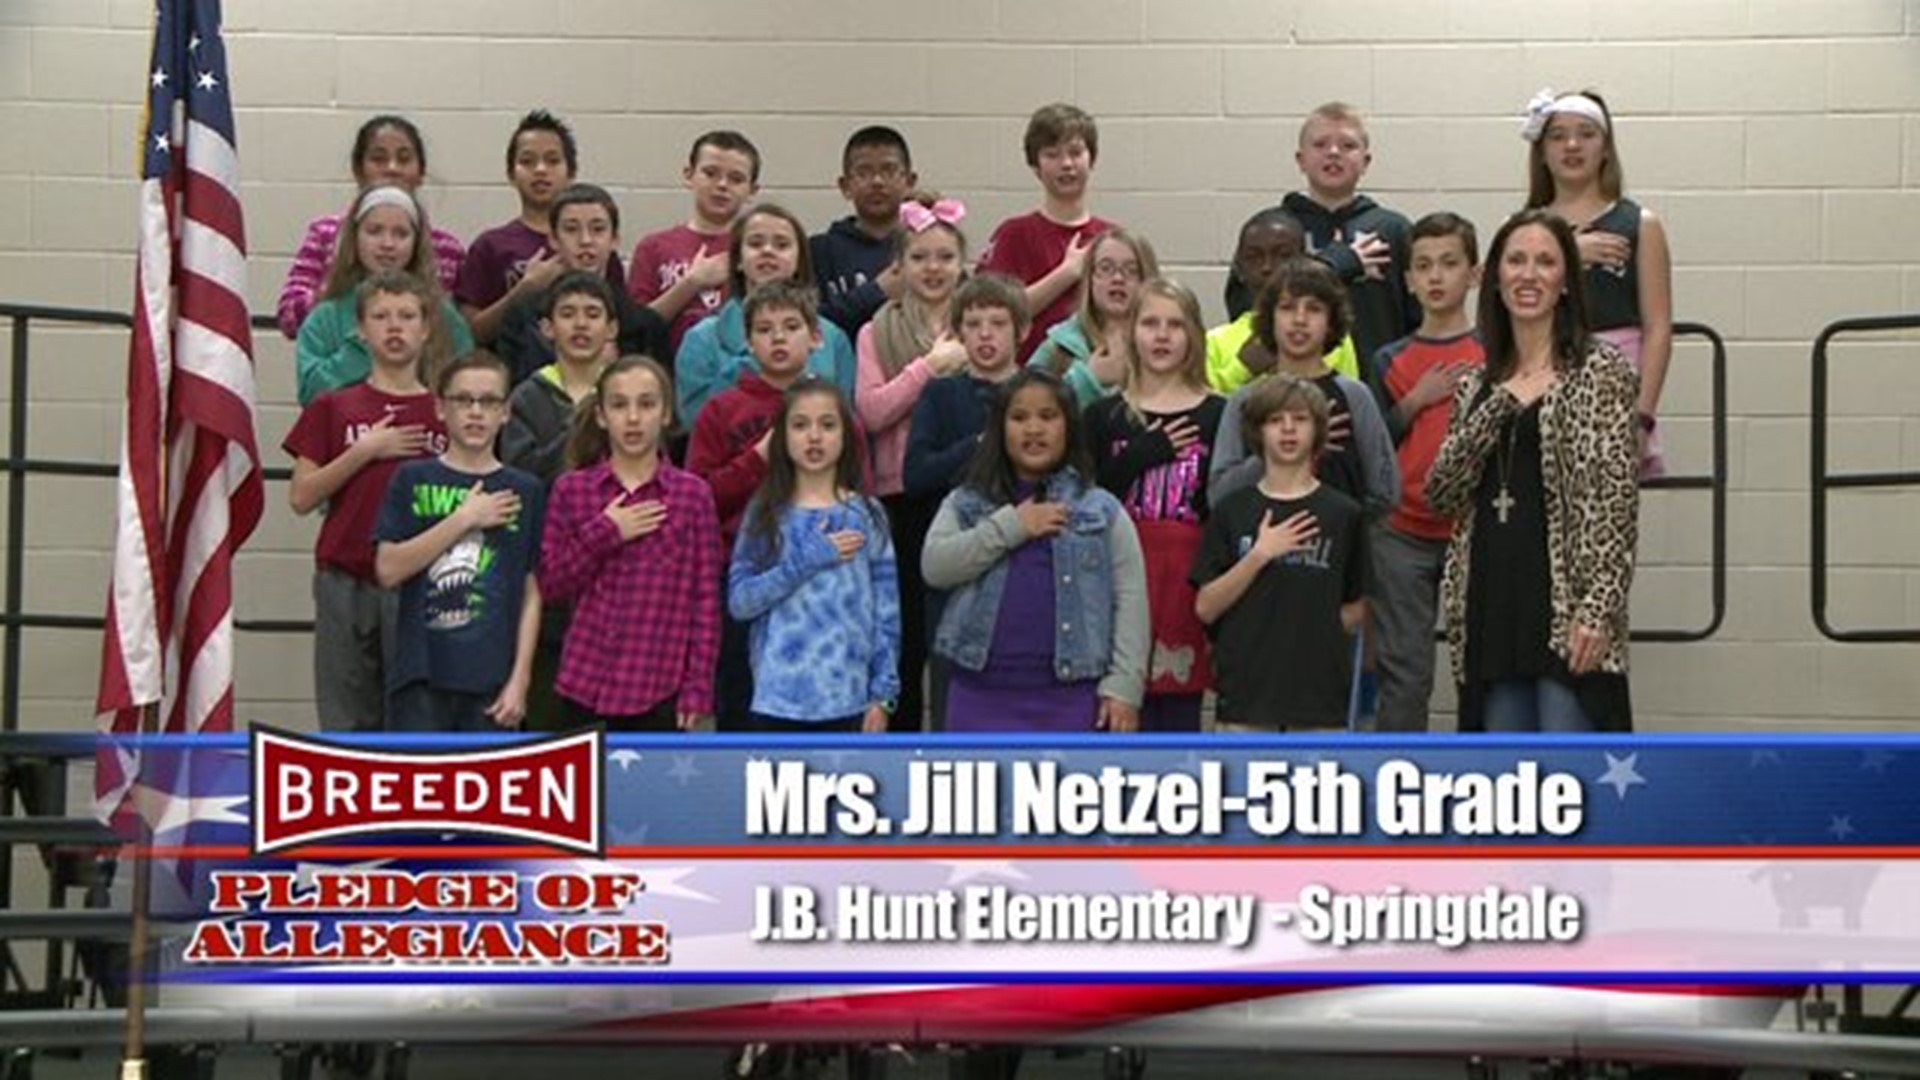 J.B. Hunt Elementary, Springdale - Mrs. Jill Nelzel - 5th Grade